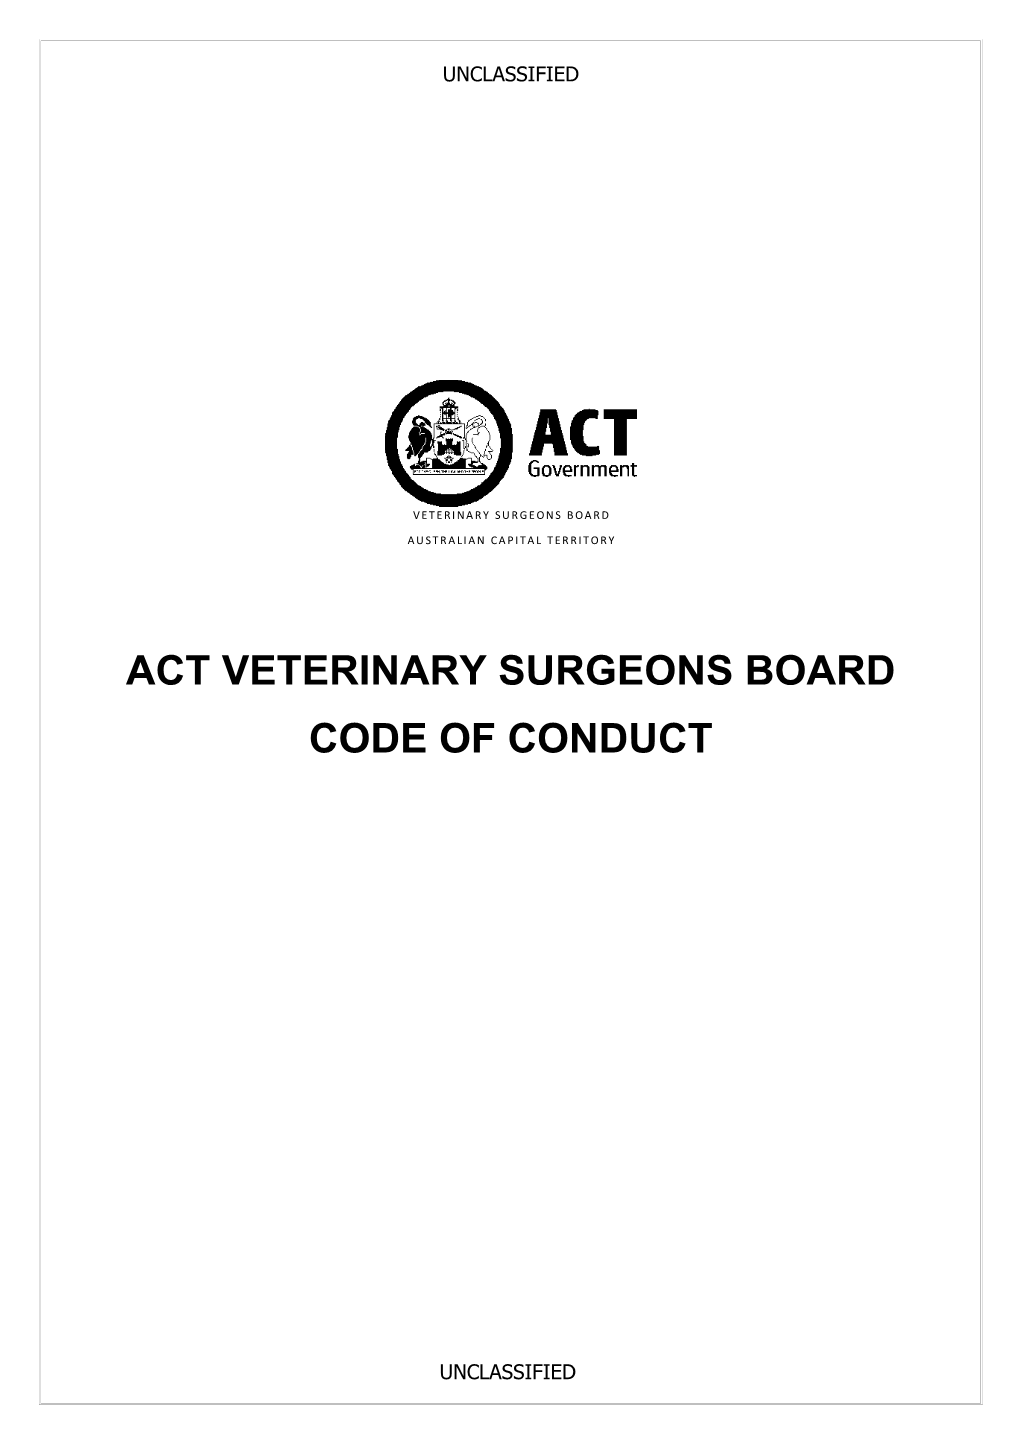 ACT Veterinary Surgeons Board Code of Conduct